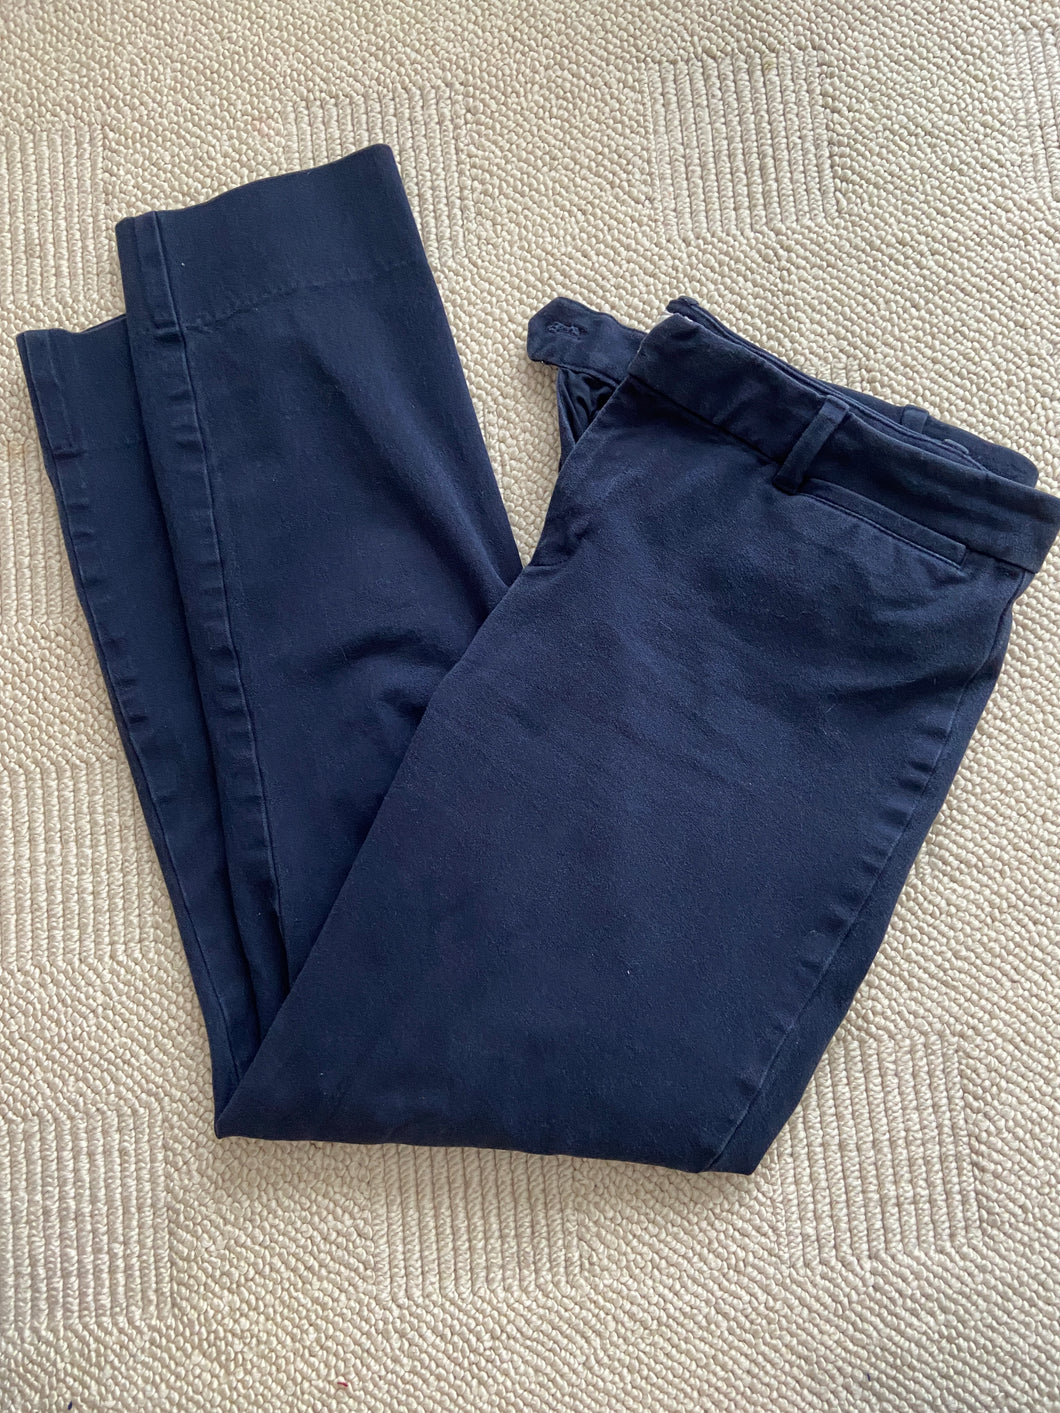 Gap Navy Blue Cropped Pants 14